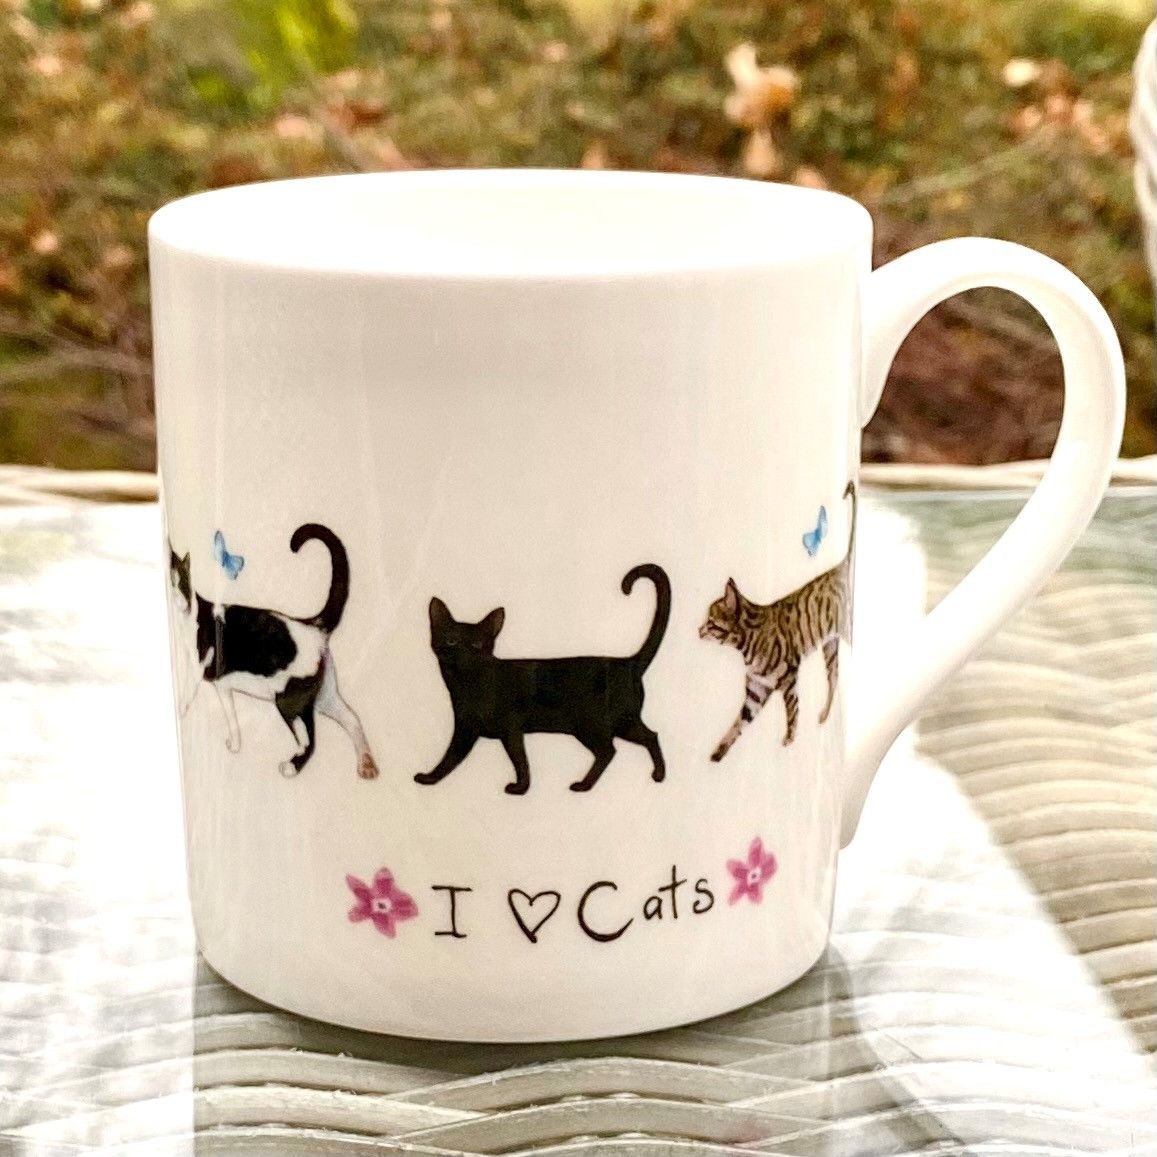 "I LOVE Cats" Mug